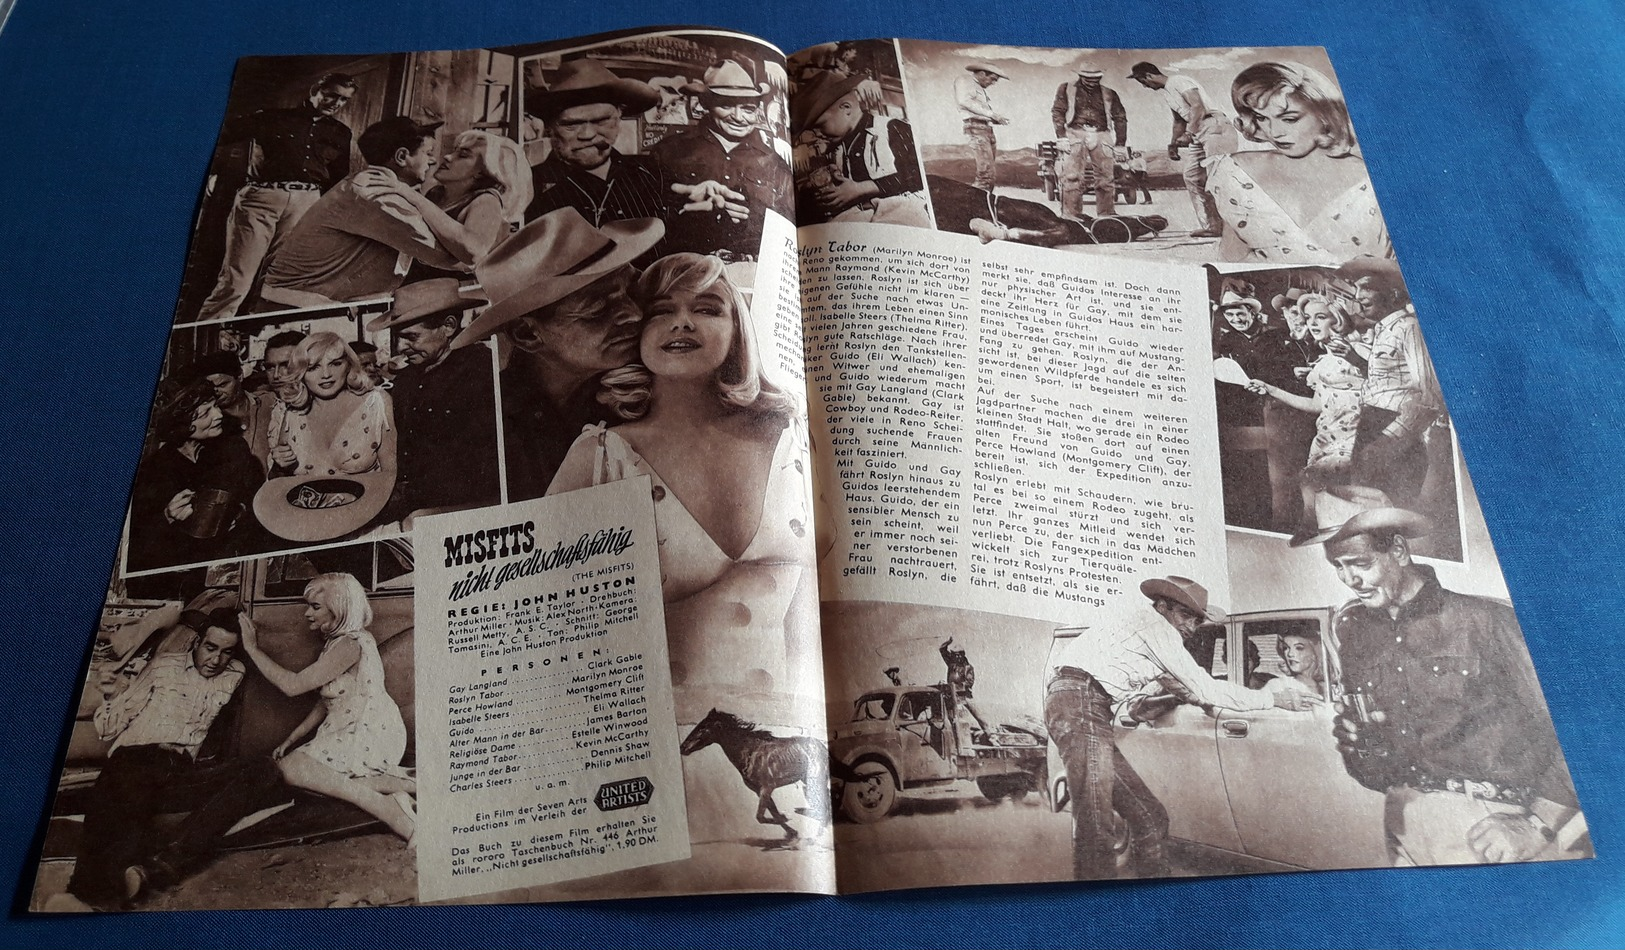 Marilyn Monroe, Clark Gable, Montgomery Clift > "MISFITS - Nicht Gesellschaftsfähig" > Altes IFB-Filmprogramm (fp137) - Zeitschriften